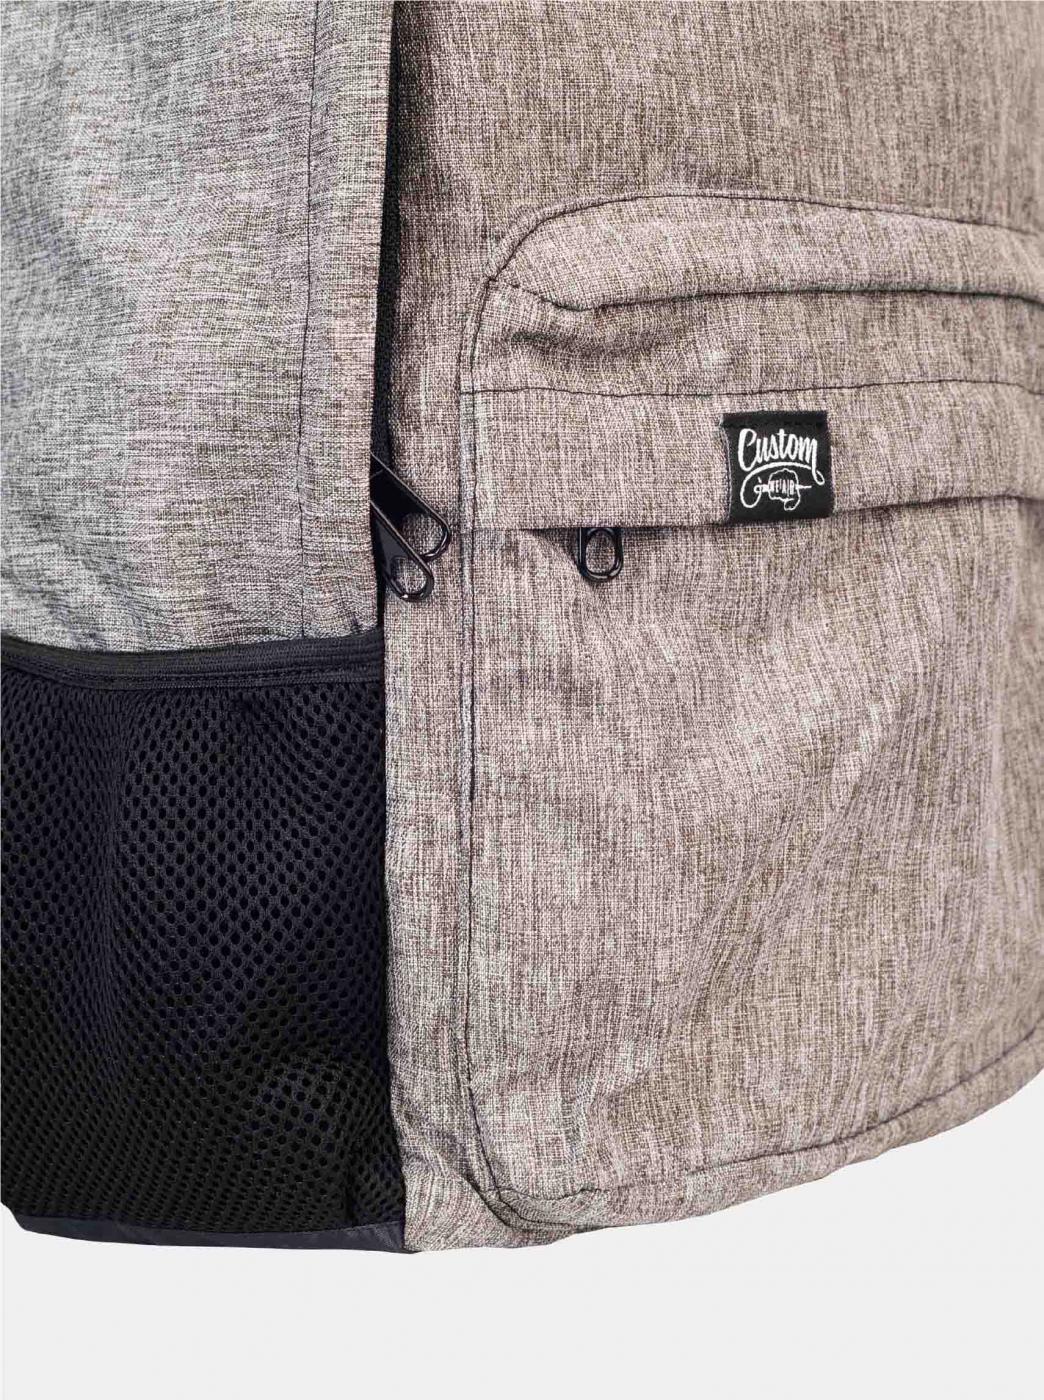 Рюкзак Custom Wear Duo Серый меланж Custom Wear - Фото 3